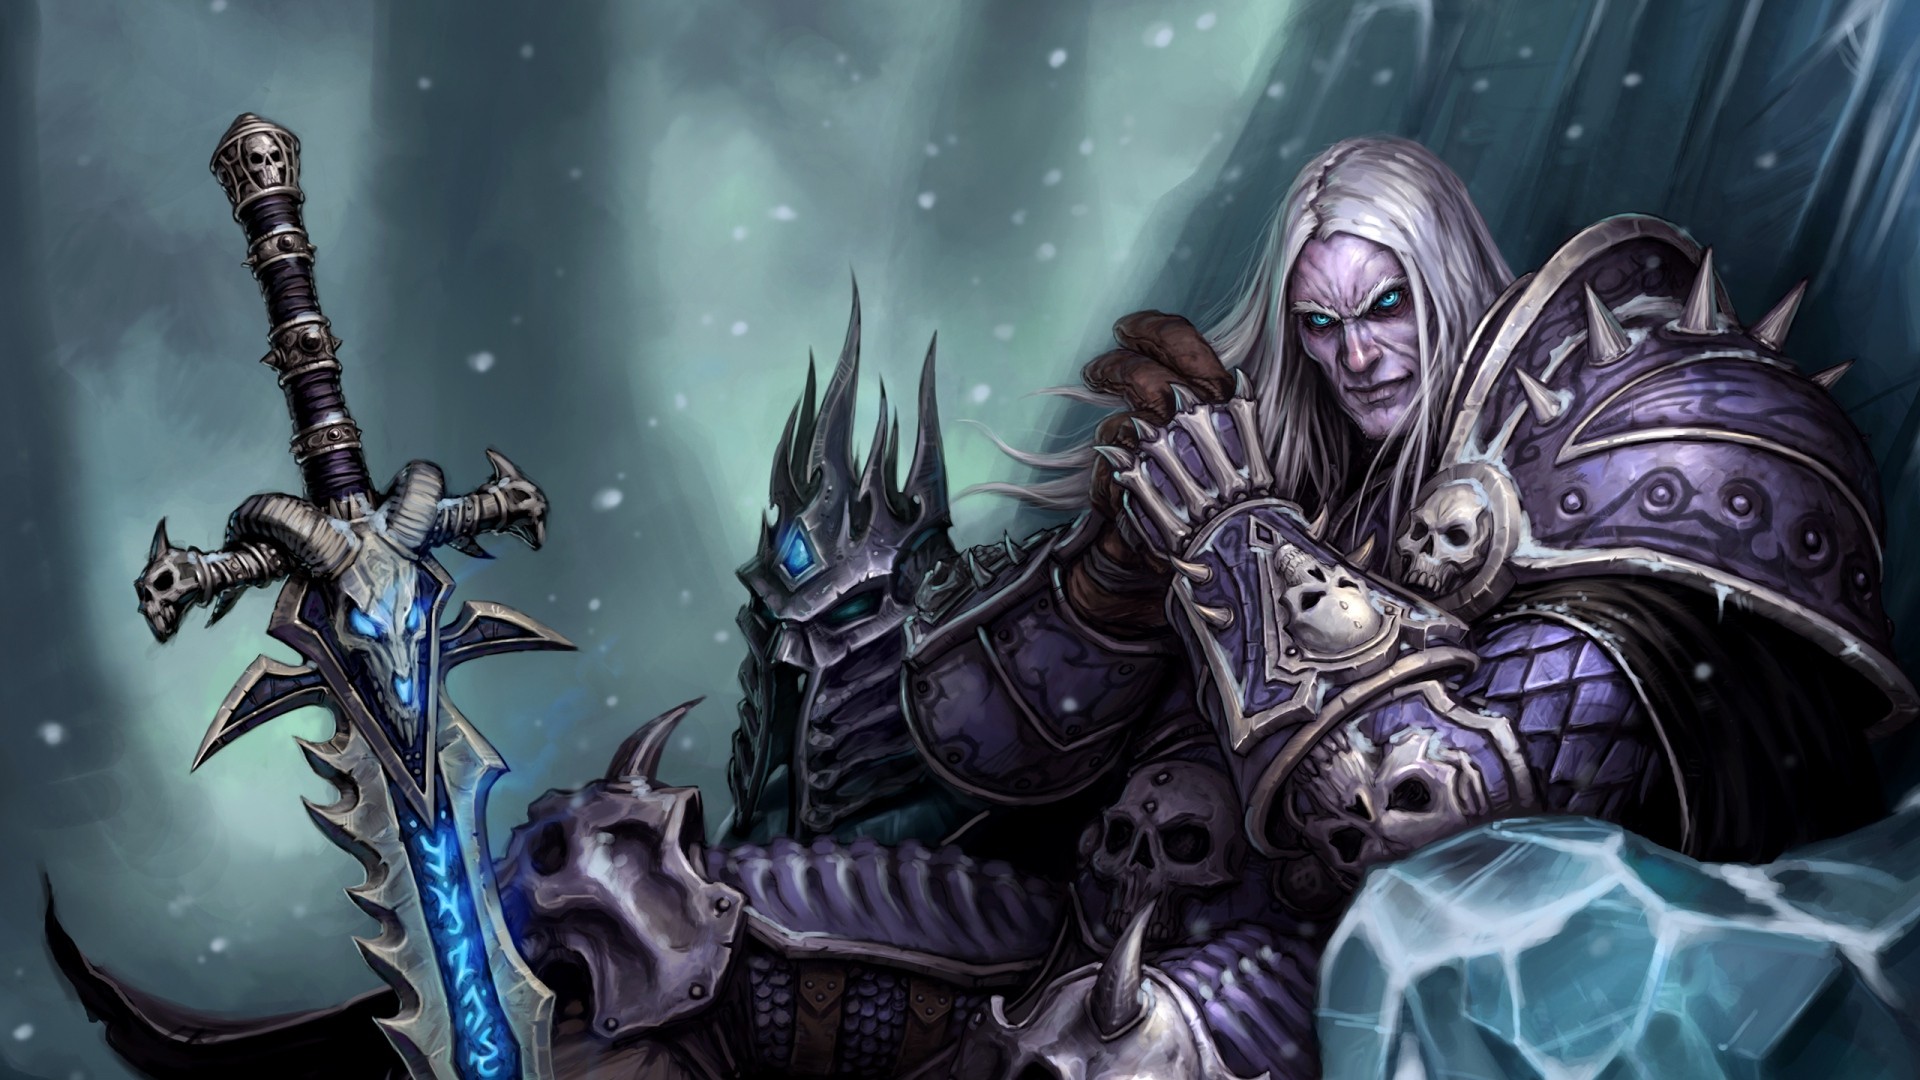 General 1920x1080 World of Warcraft: Wrath of the Lich King Arthas Menethil PC gaming Blizzard Entertainment video game art fantasy armor sword aqua eyes video game men